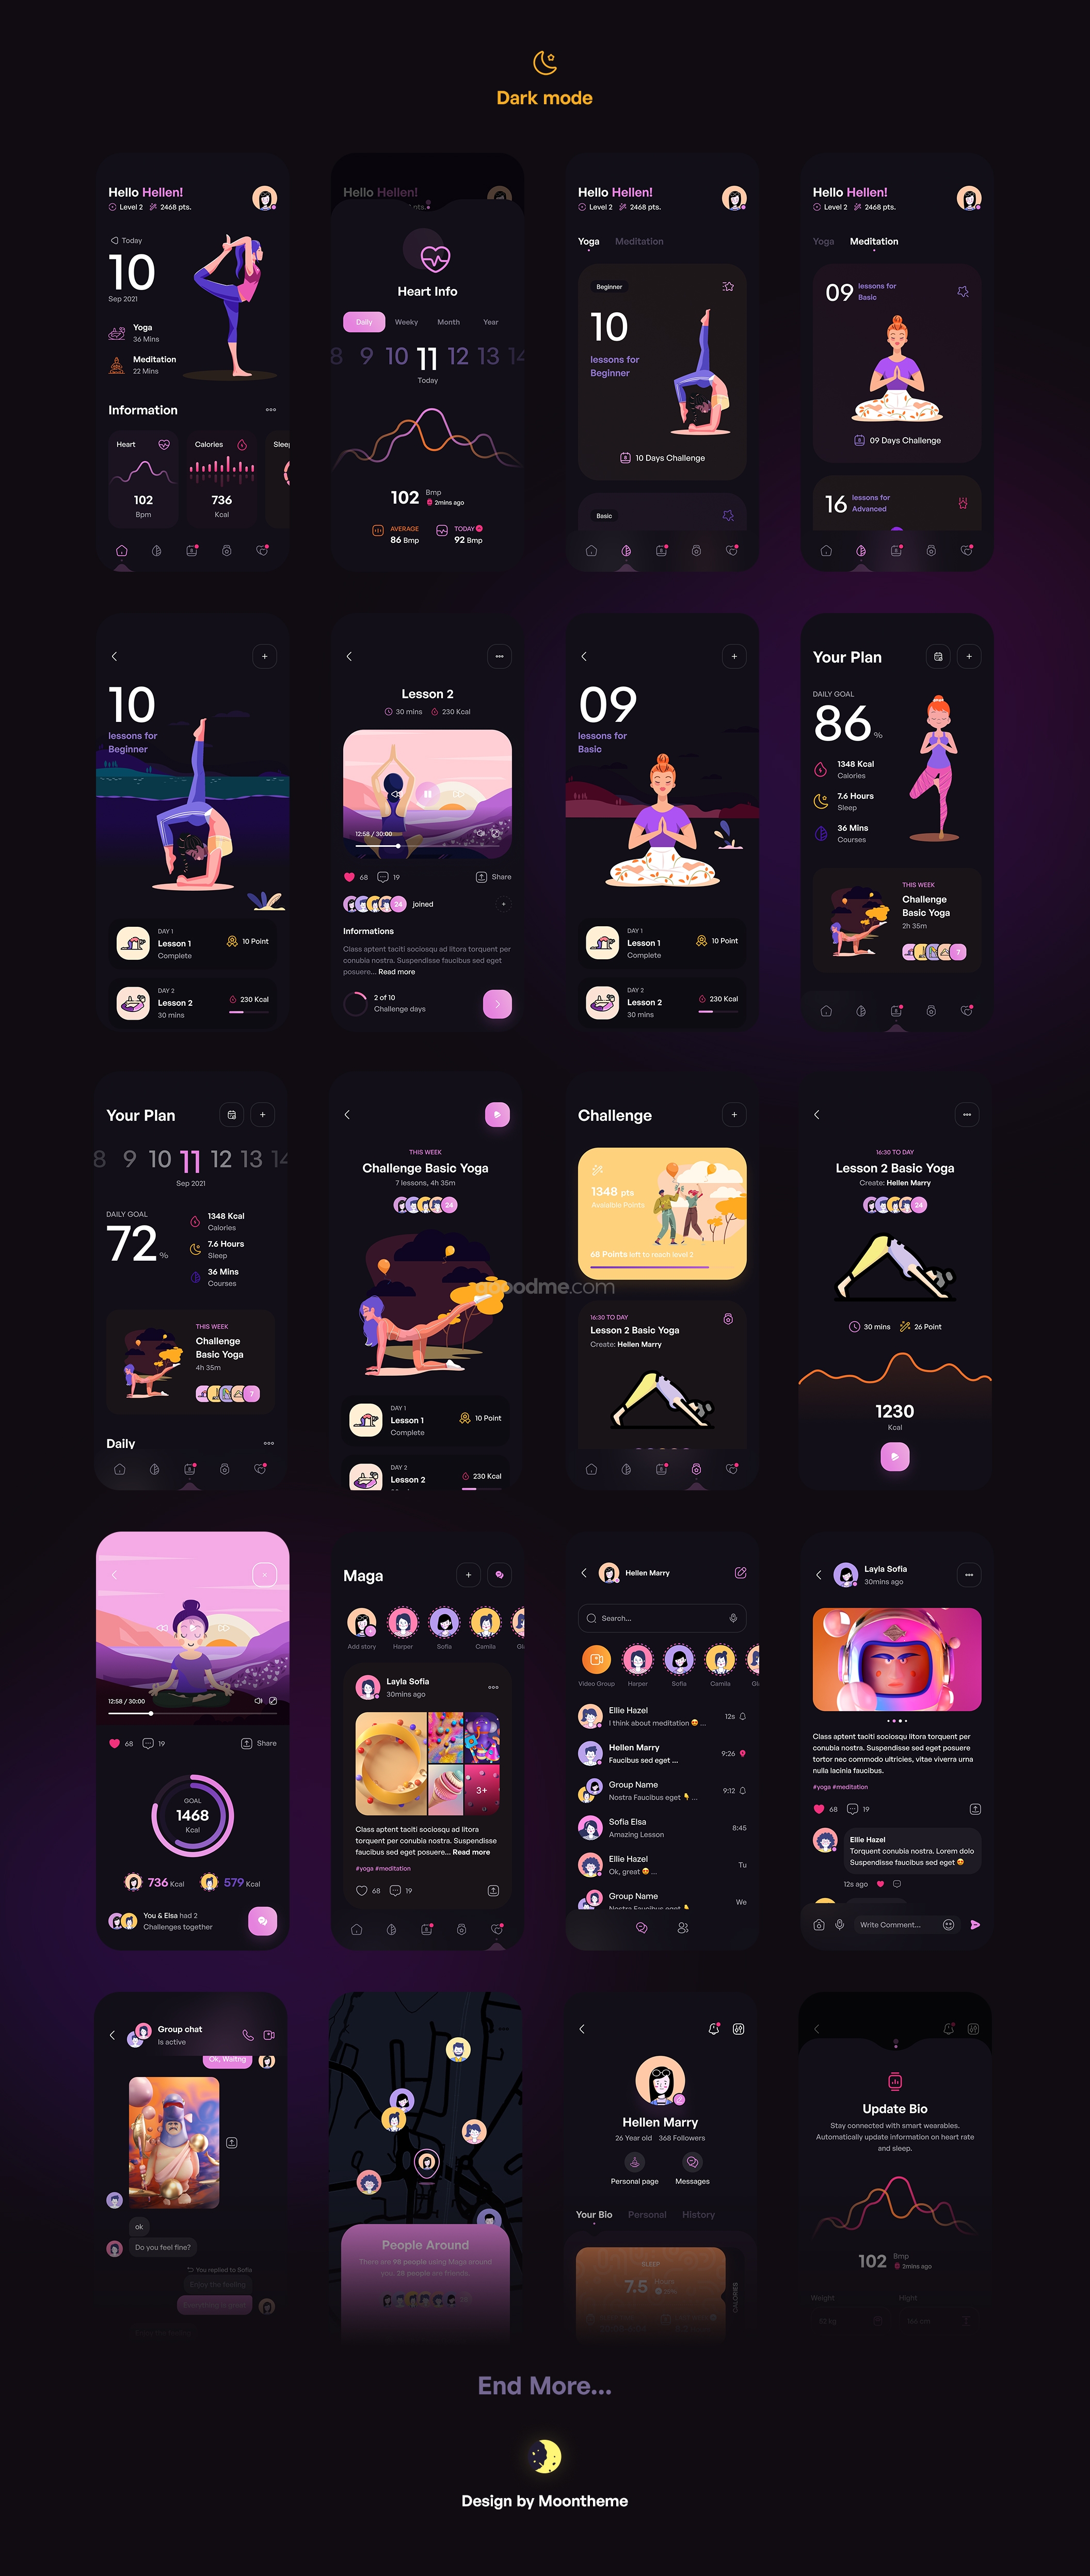 瑜伽和冥想在线应用 UI 设计模板套件Maga – Yoga & Meditation UI Kit